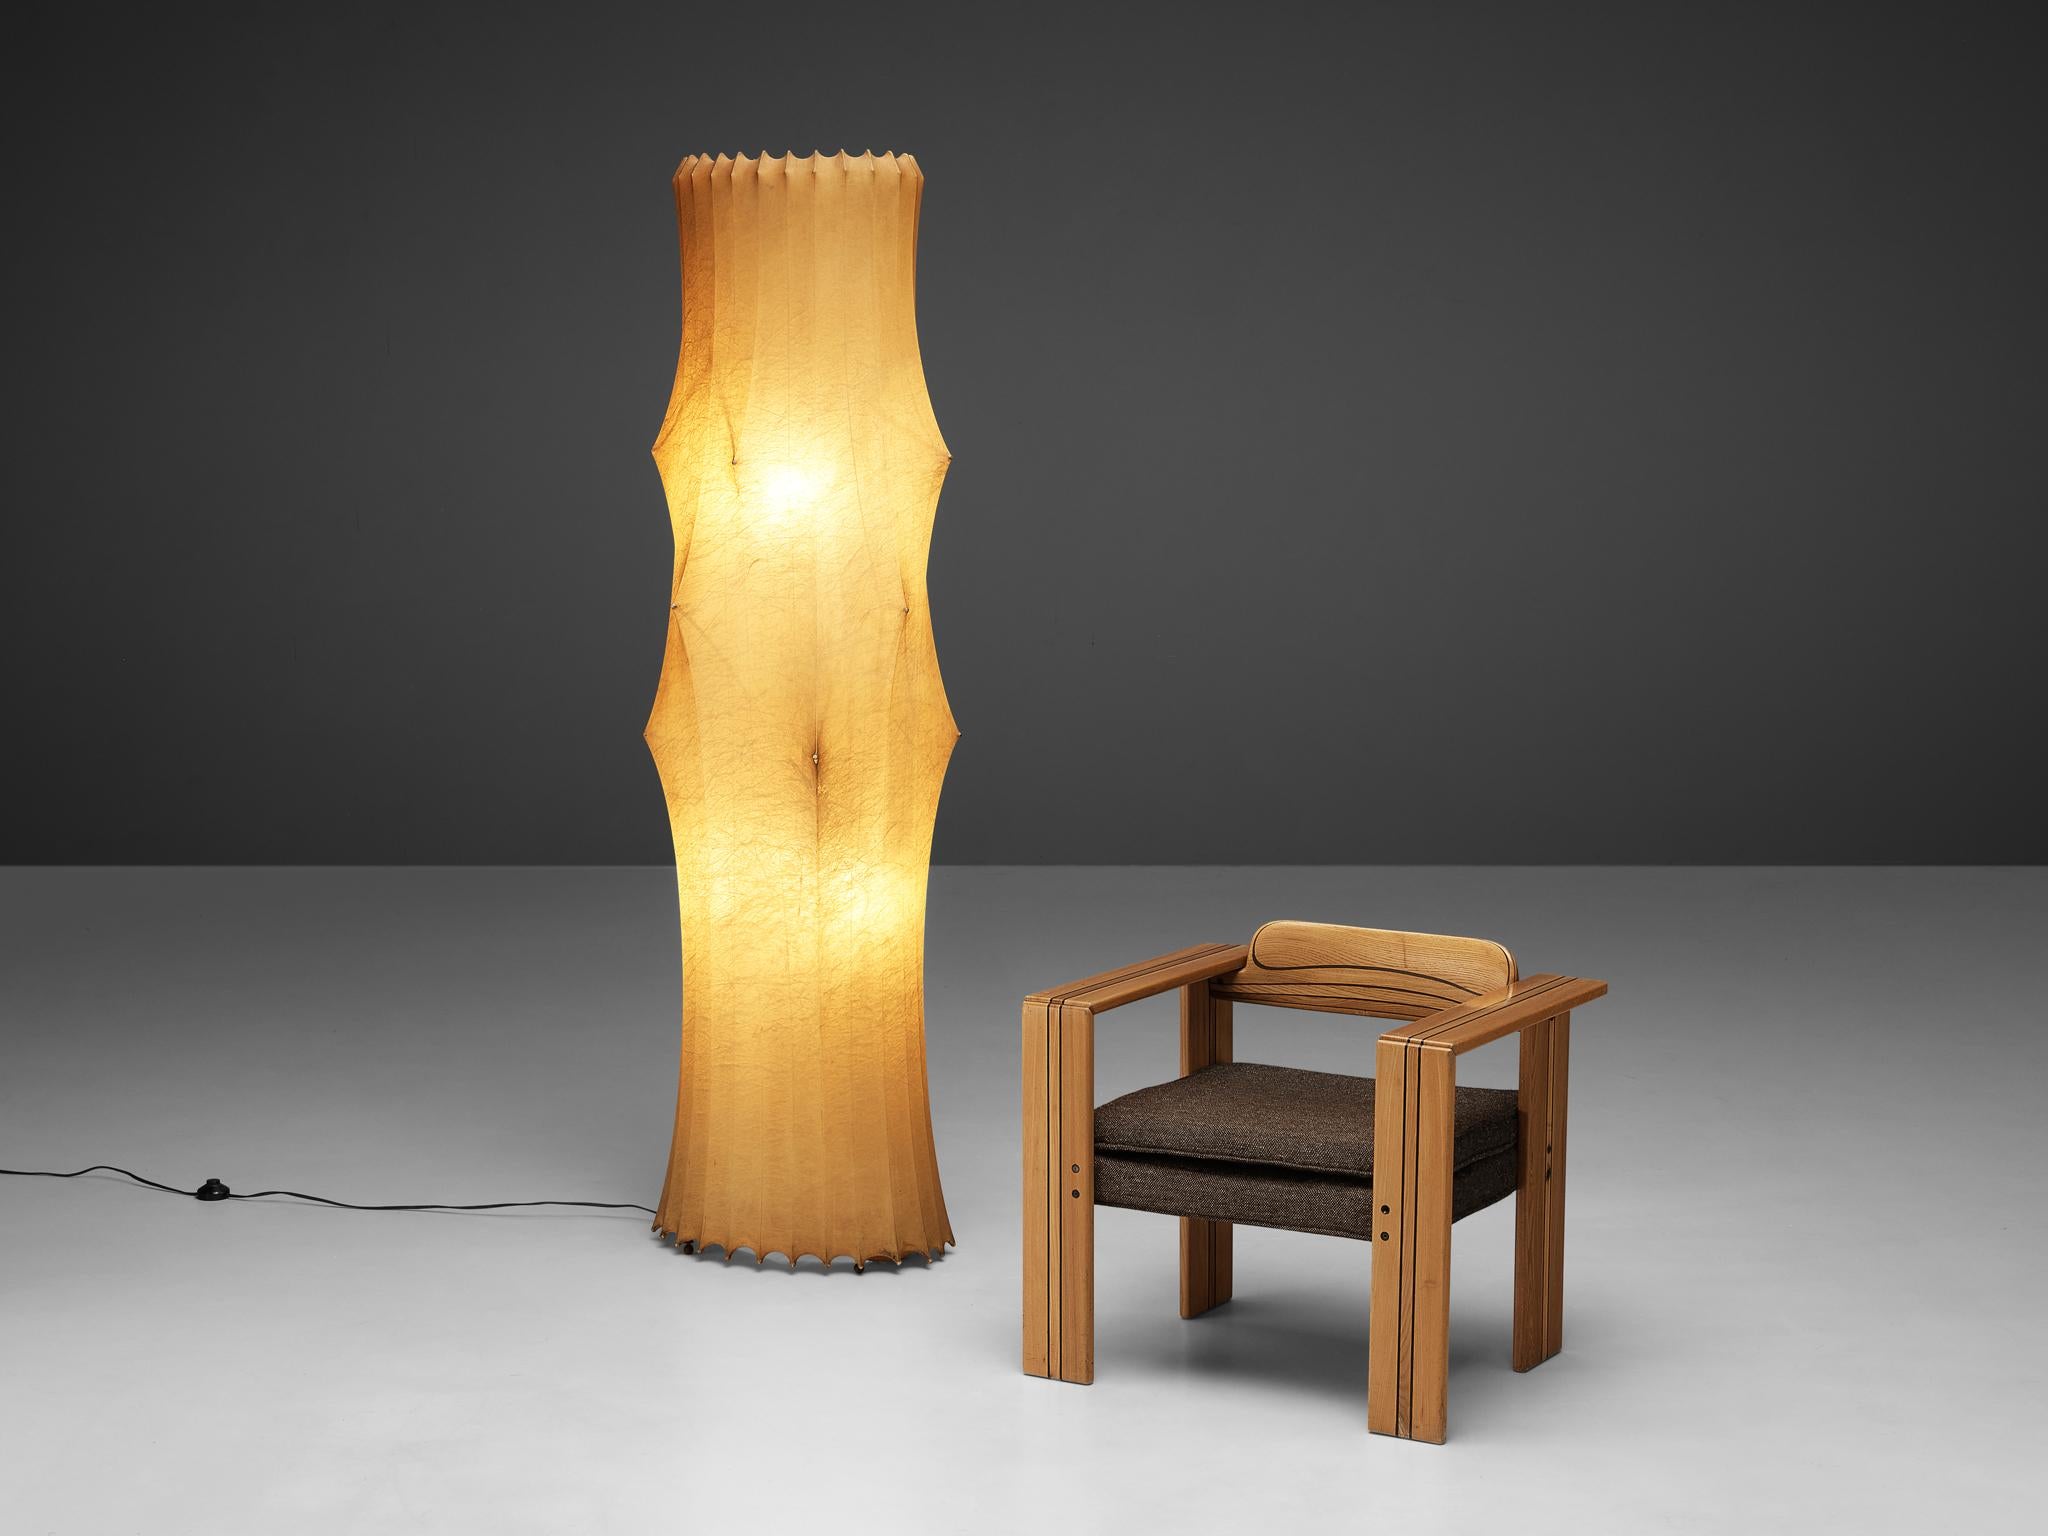 Italian Afra & Tobia Scarpa 'Artona' Lounge Chair in Walnut and 'Fantasma' Floor Lamp